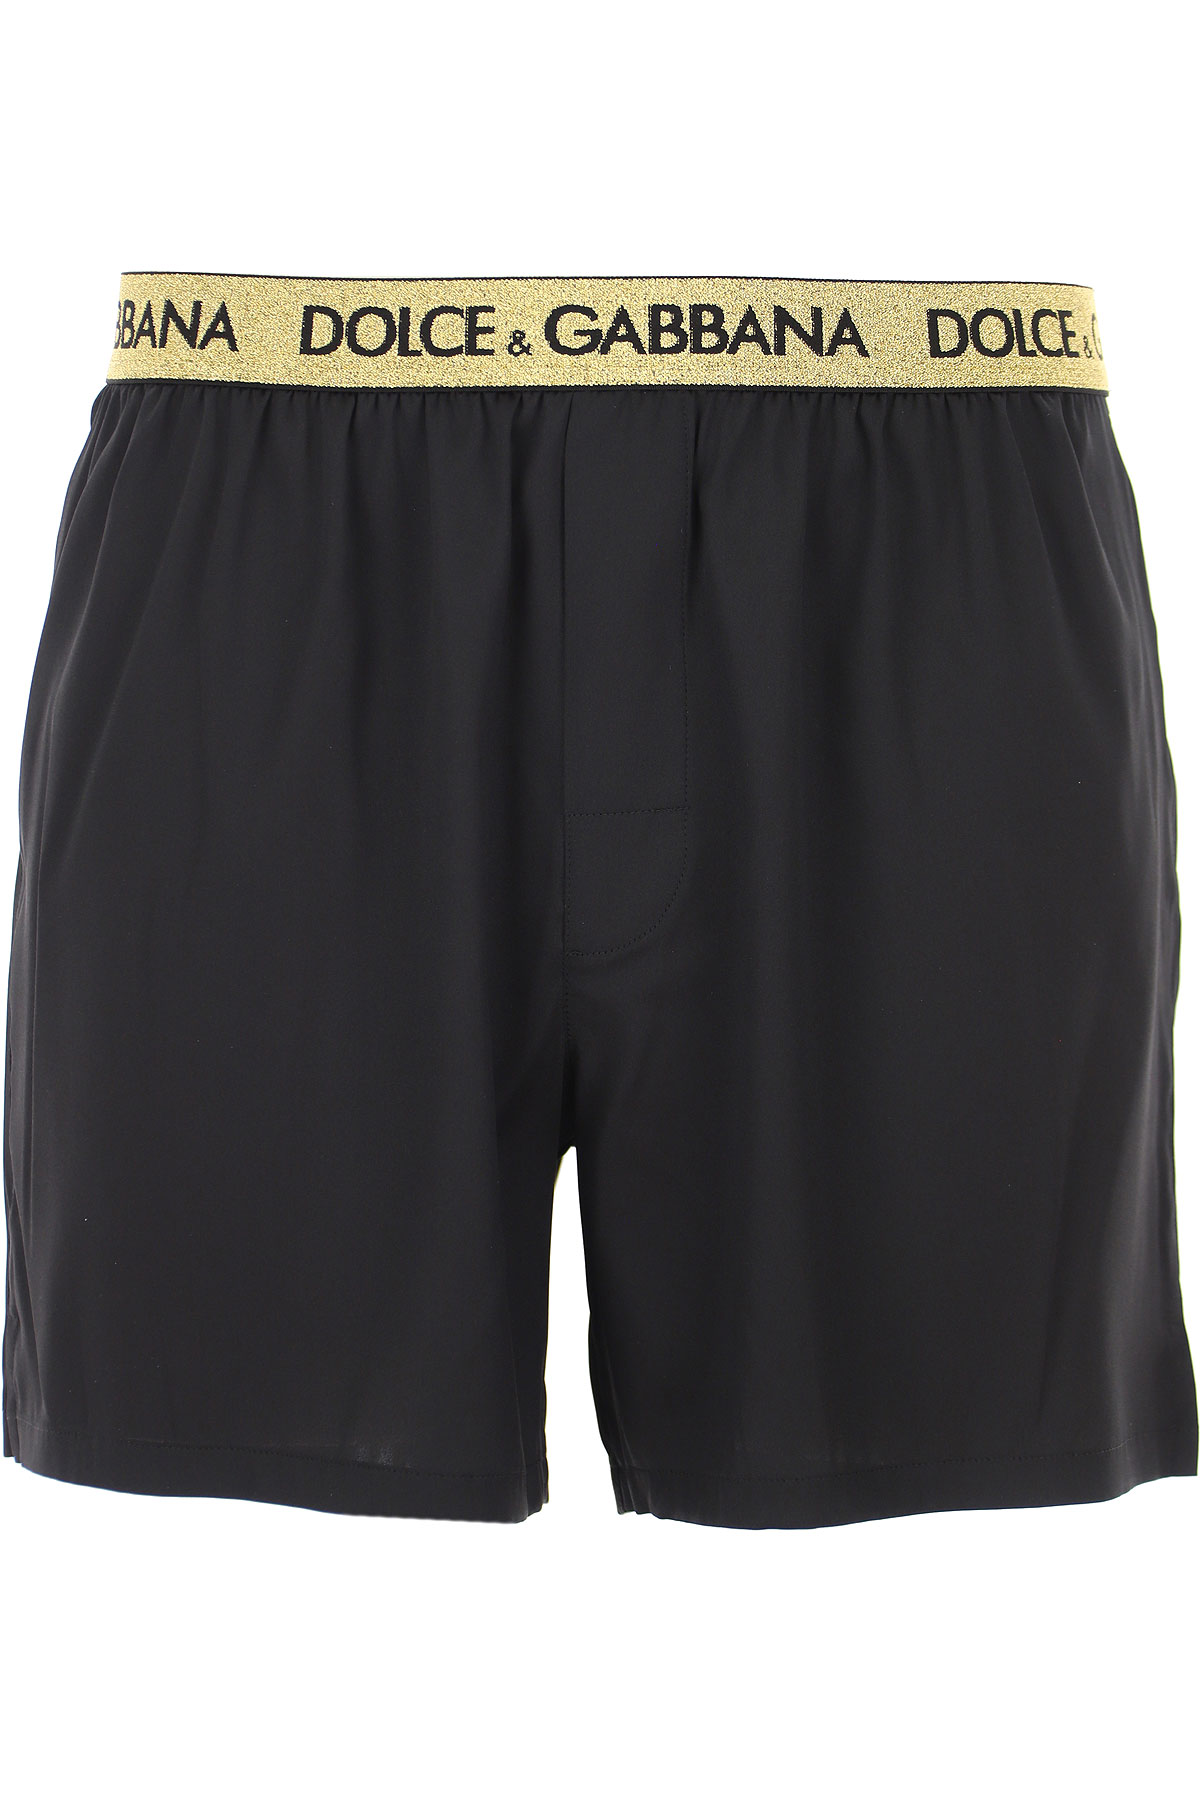 Mens Underwear Dolce & Gabbana, Style code: m1a04t-fuad8-n0000